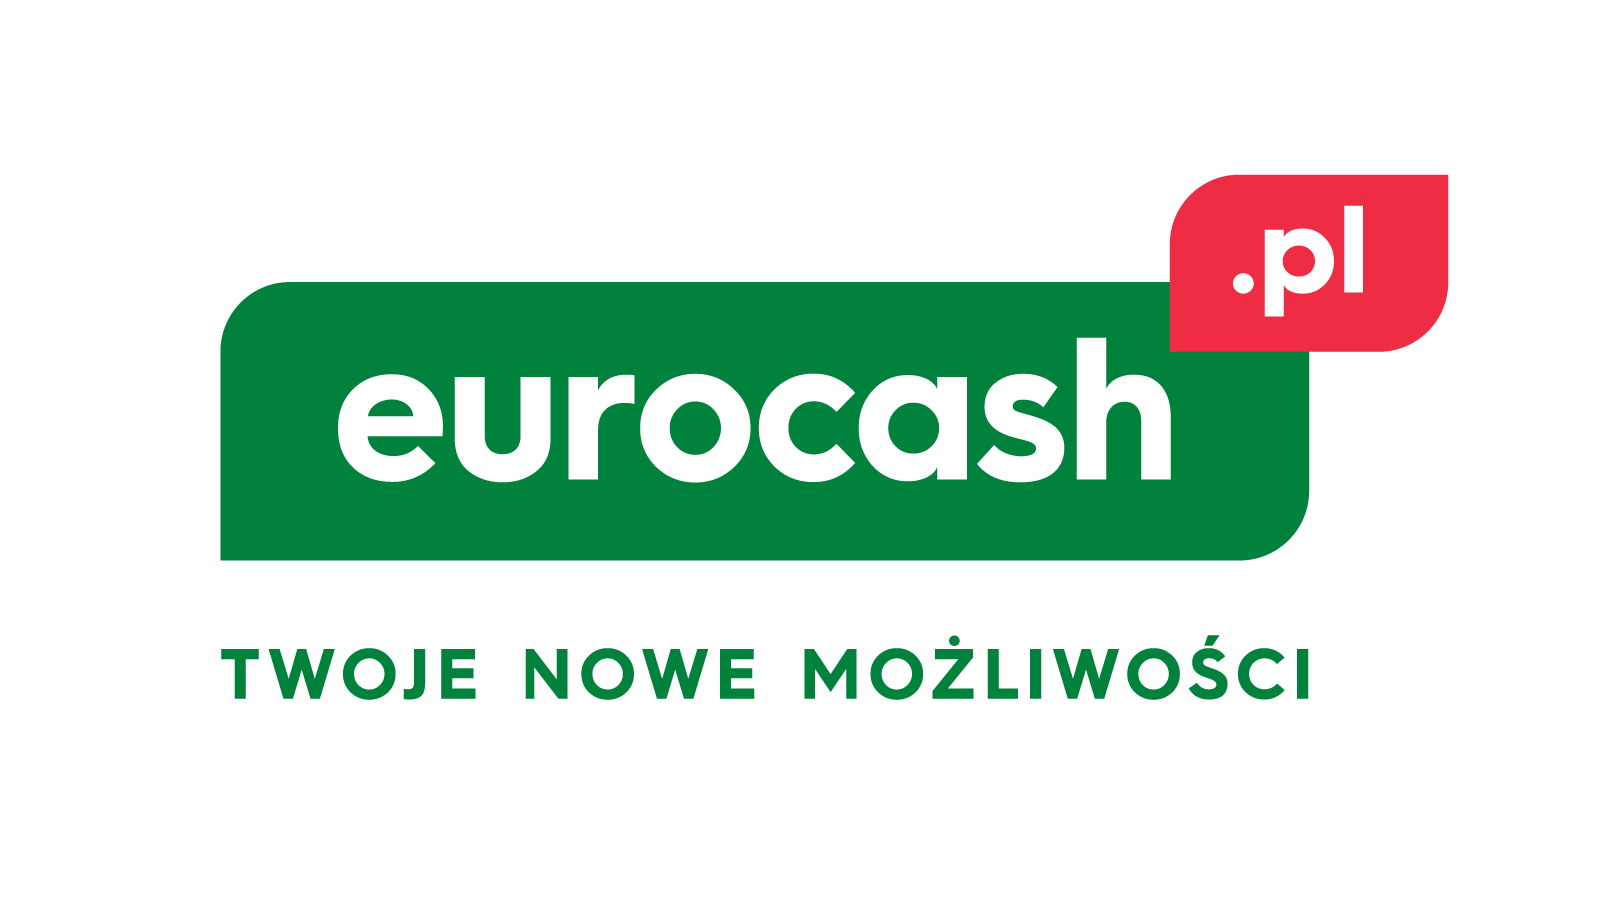 eurocash_pl_podstawowa_wersja